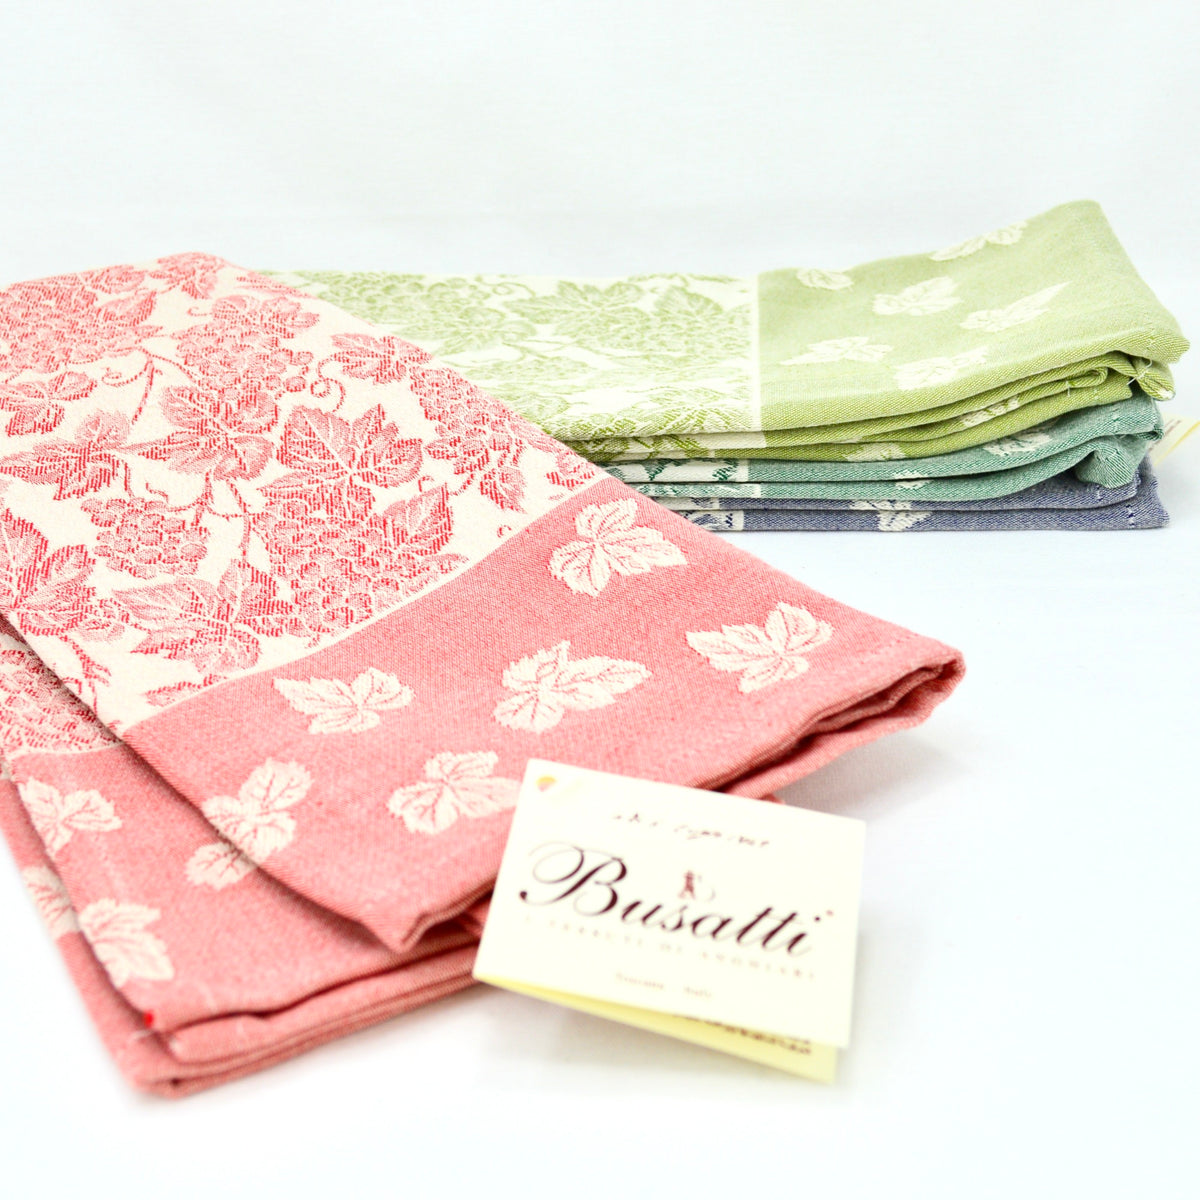 Busatti Uva Kitchen Towel, Assorted Colors, Made in Italy - My Italian Decor